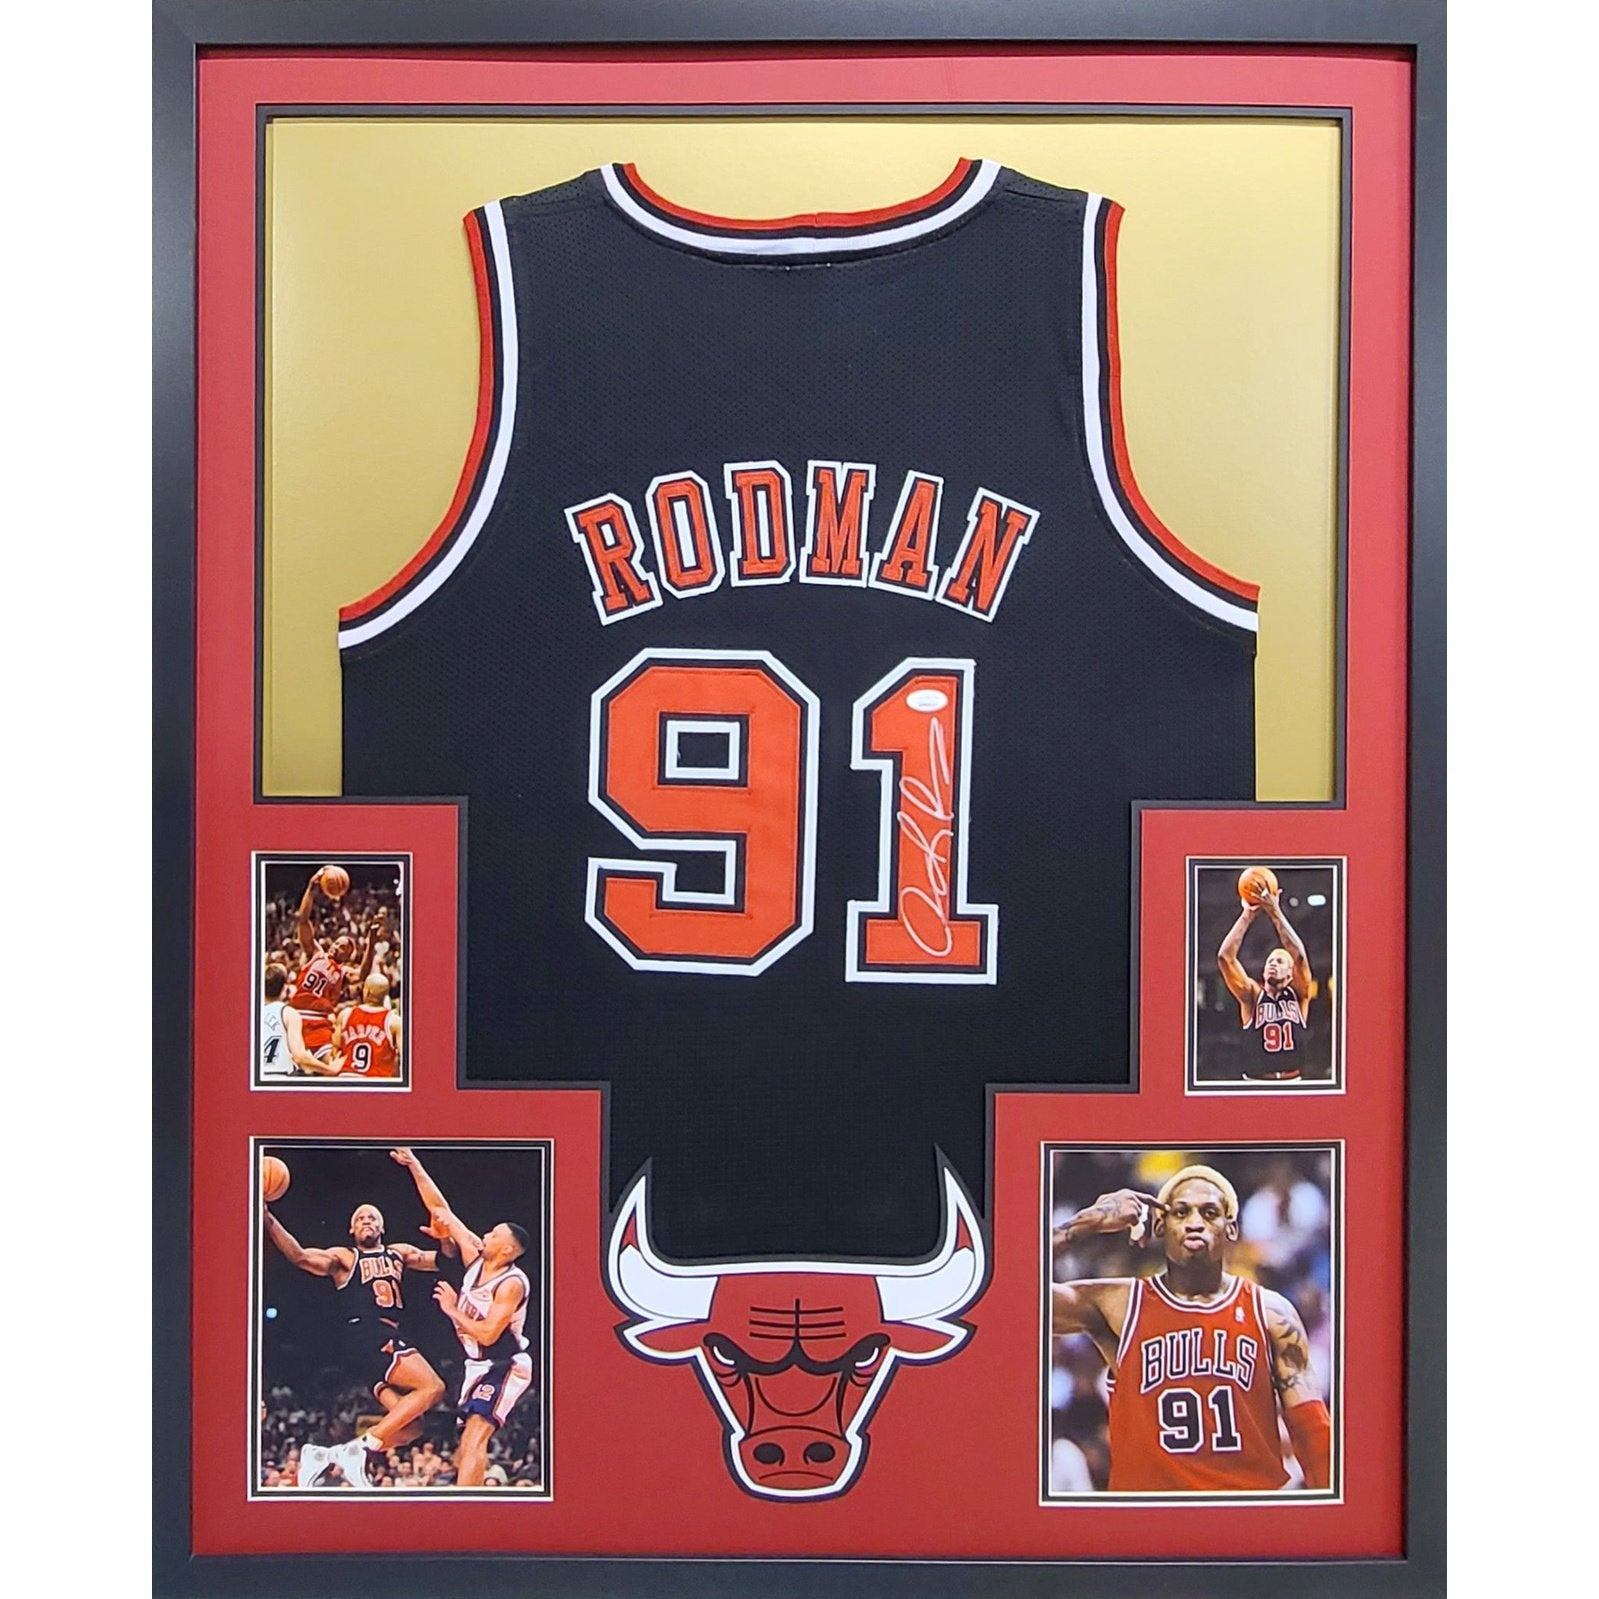 Dennis Rodman Signed Chicago Bulls Jersey - JSA Certified